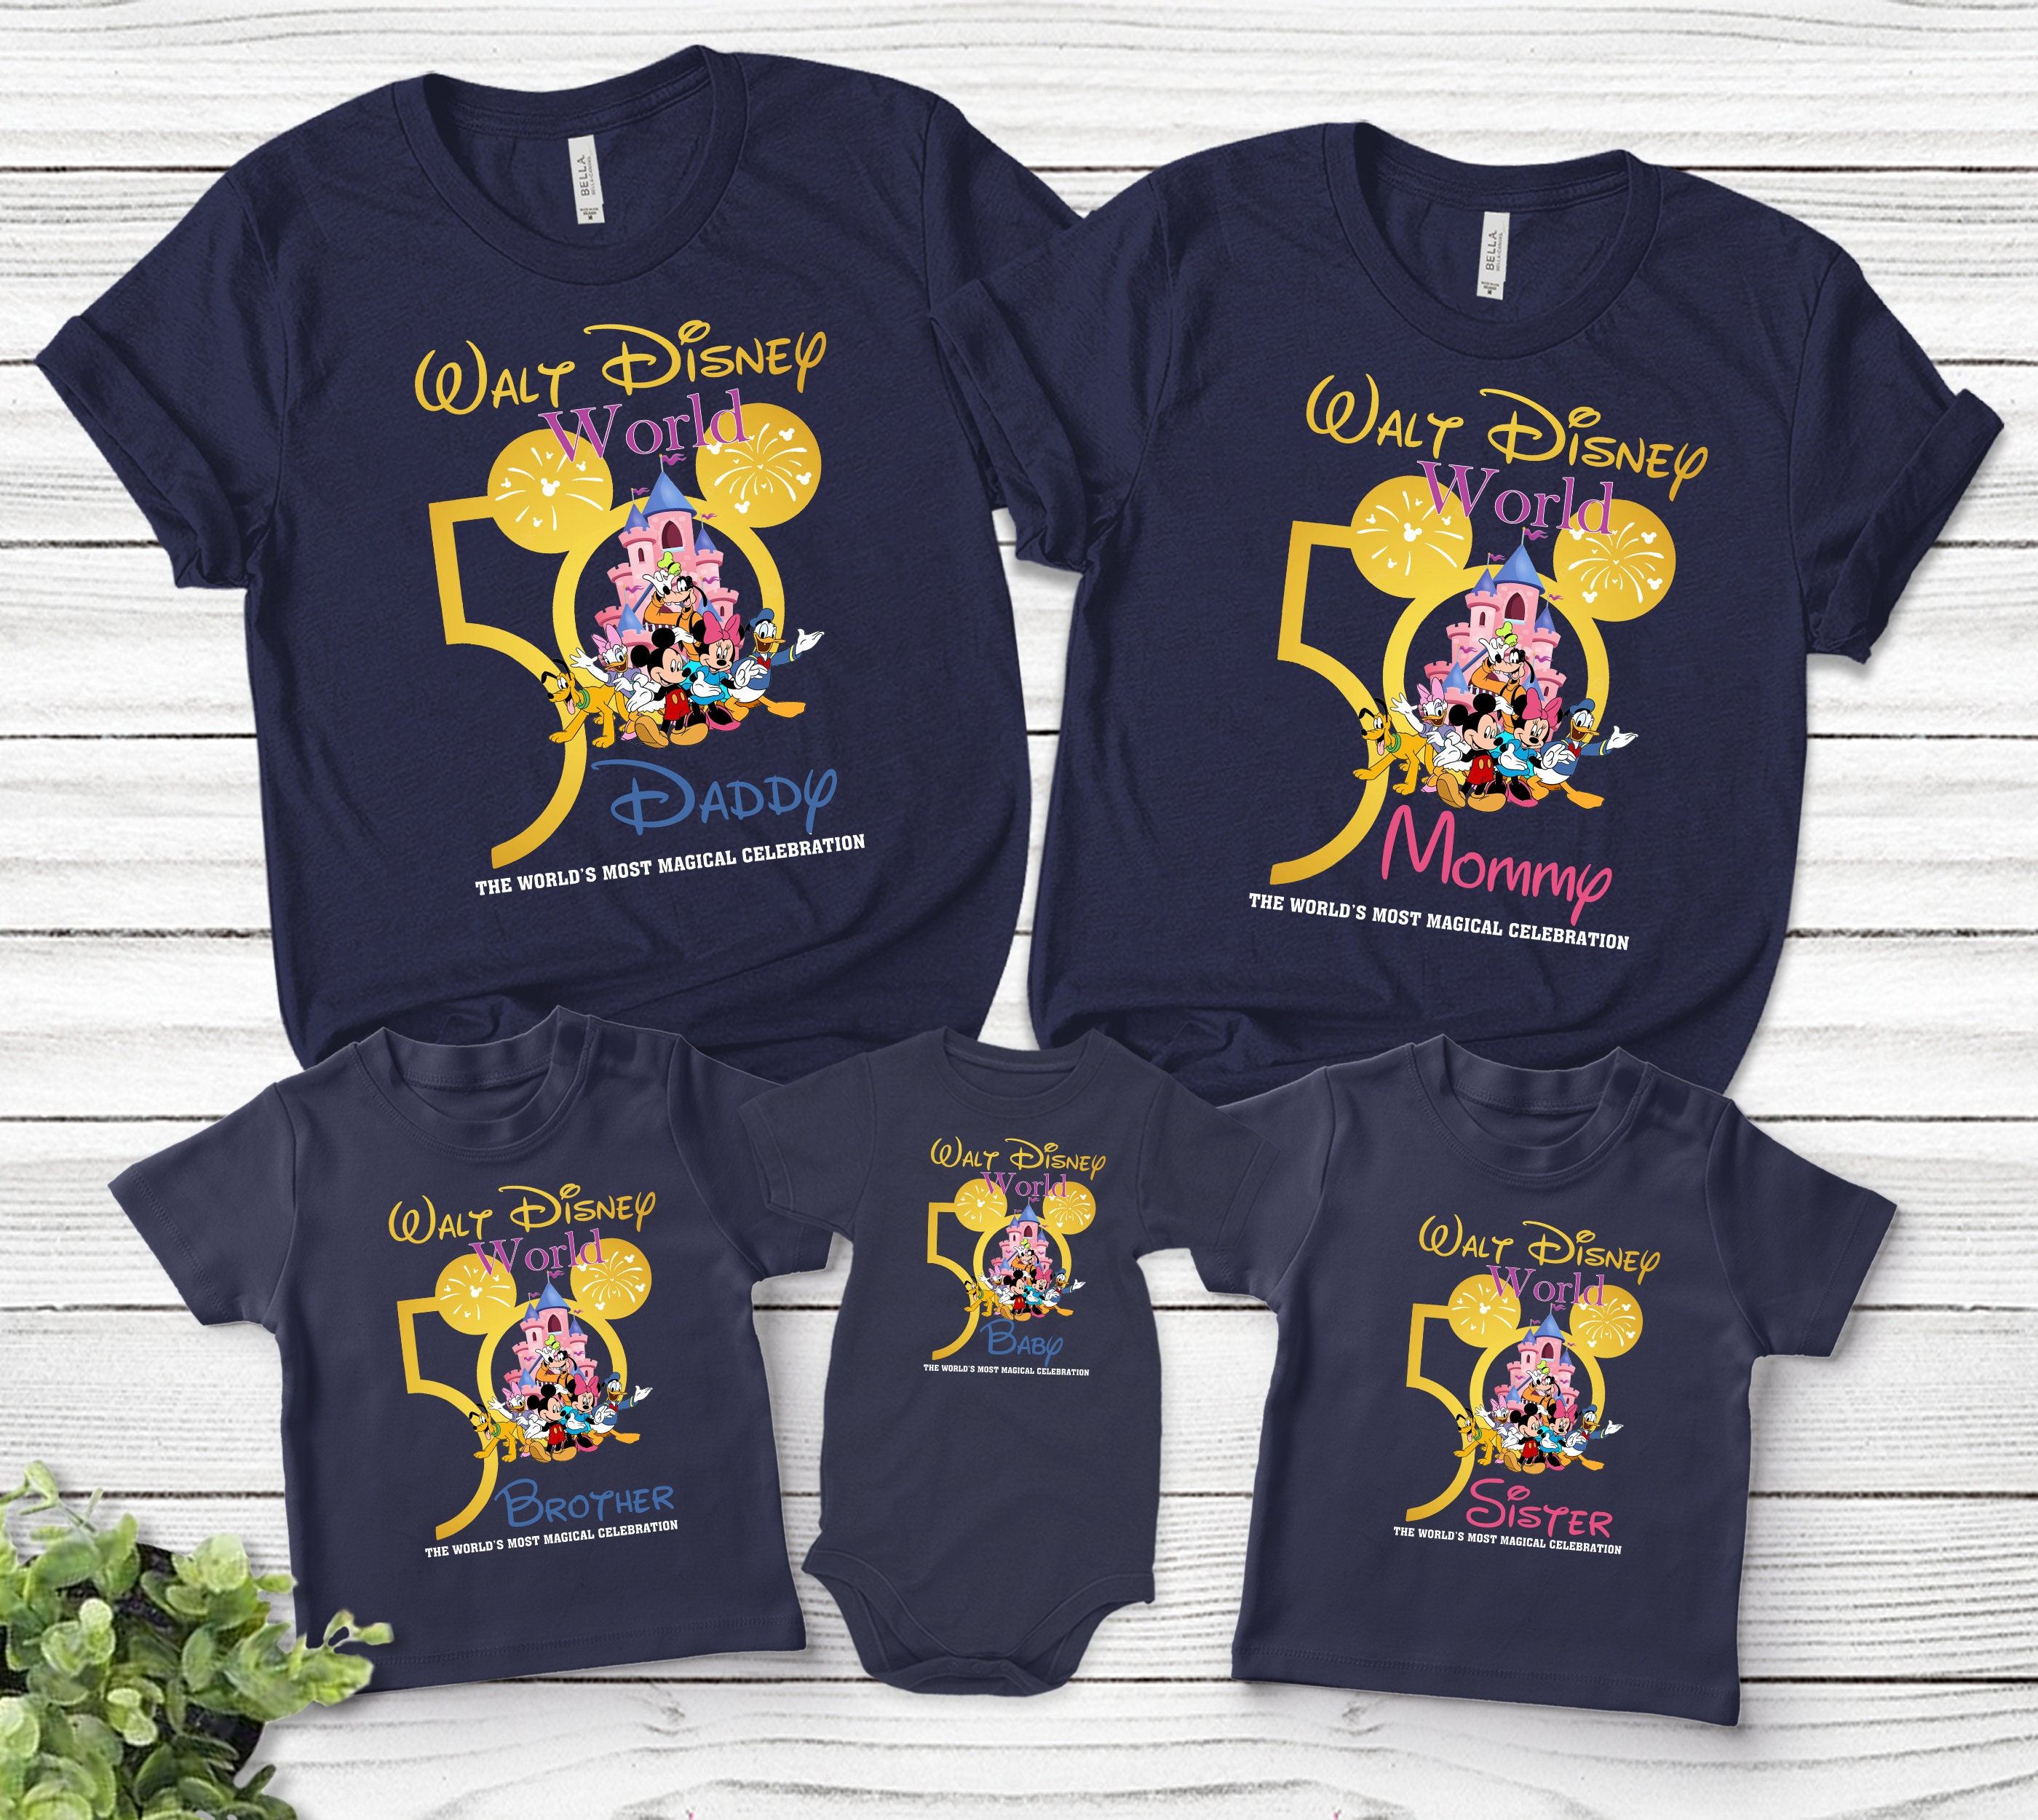 Disney 50th Anniversary shirt, Disney World 50th Anniversary Shirt, Disney World shirt